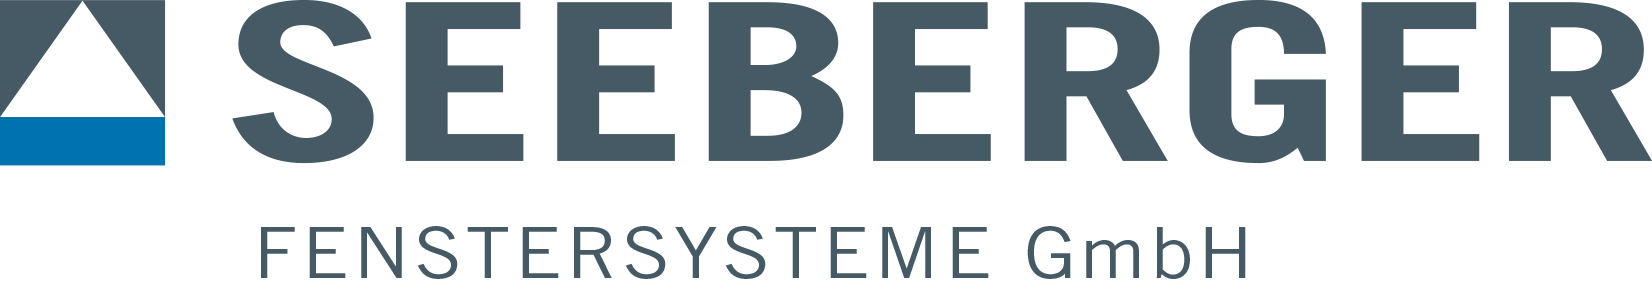 Seeberger_Logo.png